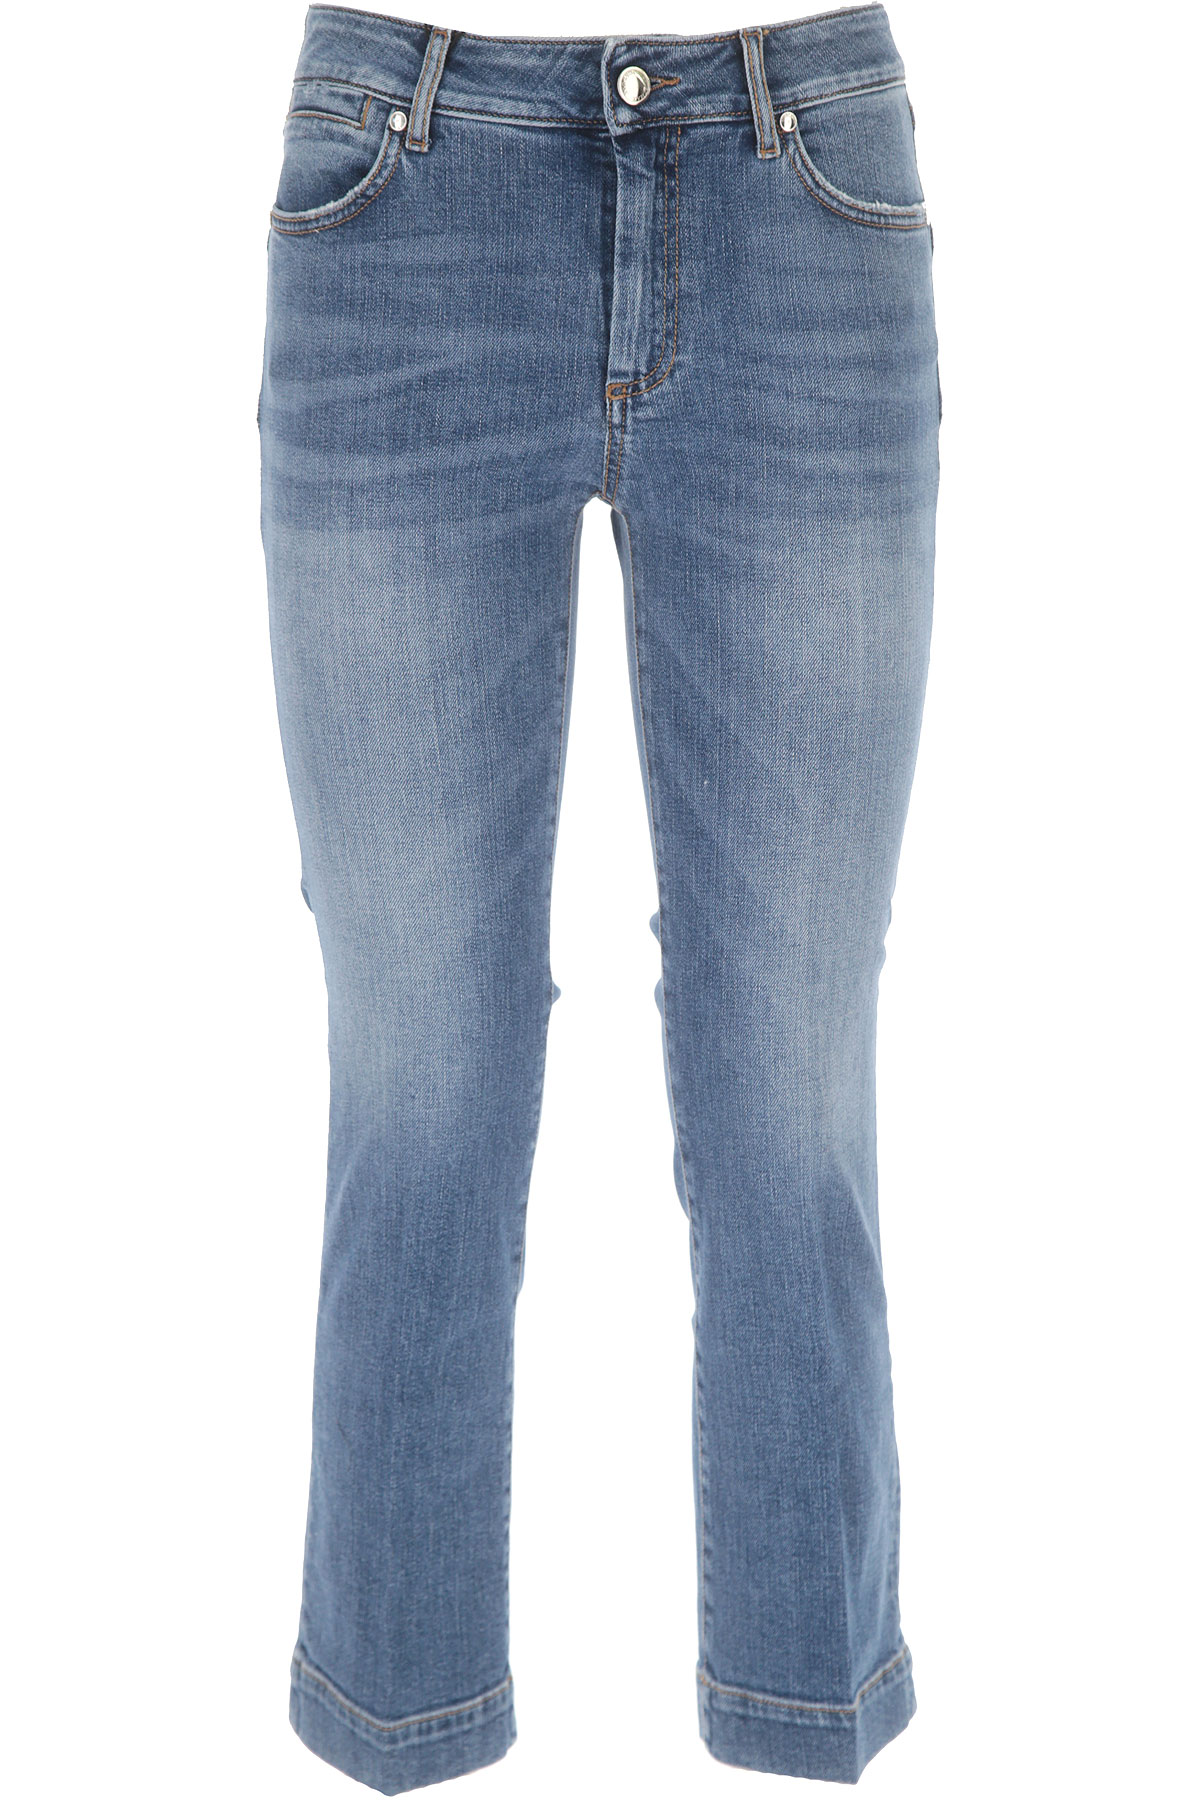 Max MaraMax Mara Jeans On Sale, Denim Medium Blue, Cotton, 2021, 26 27 ...